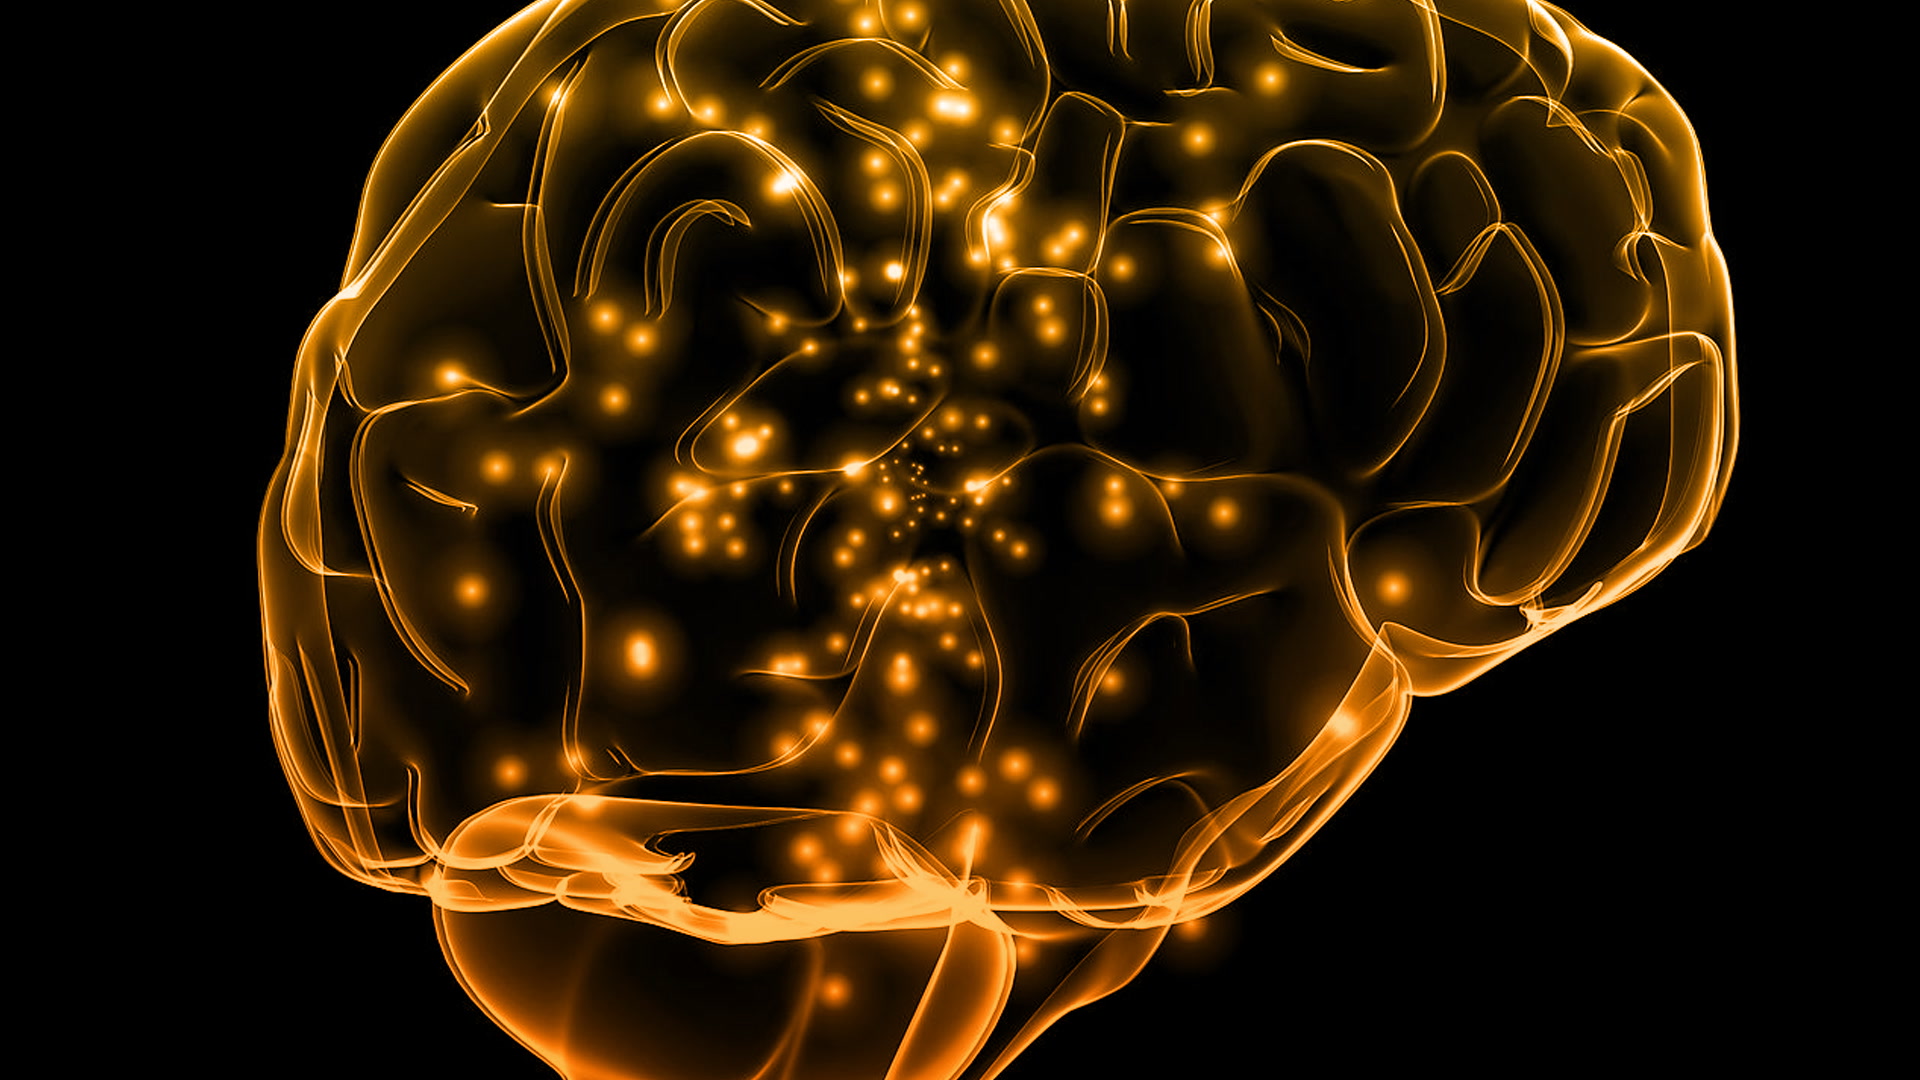 NeuroStar entrega estimulación magnética transcraneal para aliviar la depresión